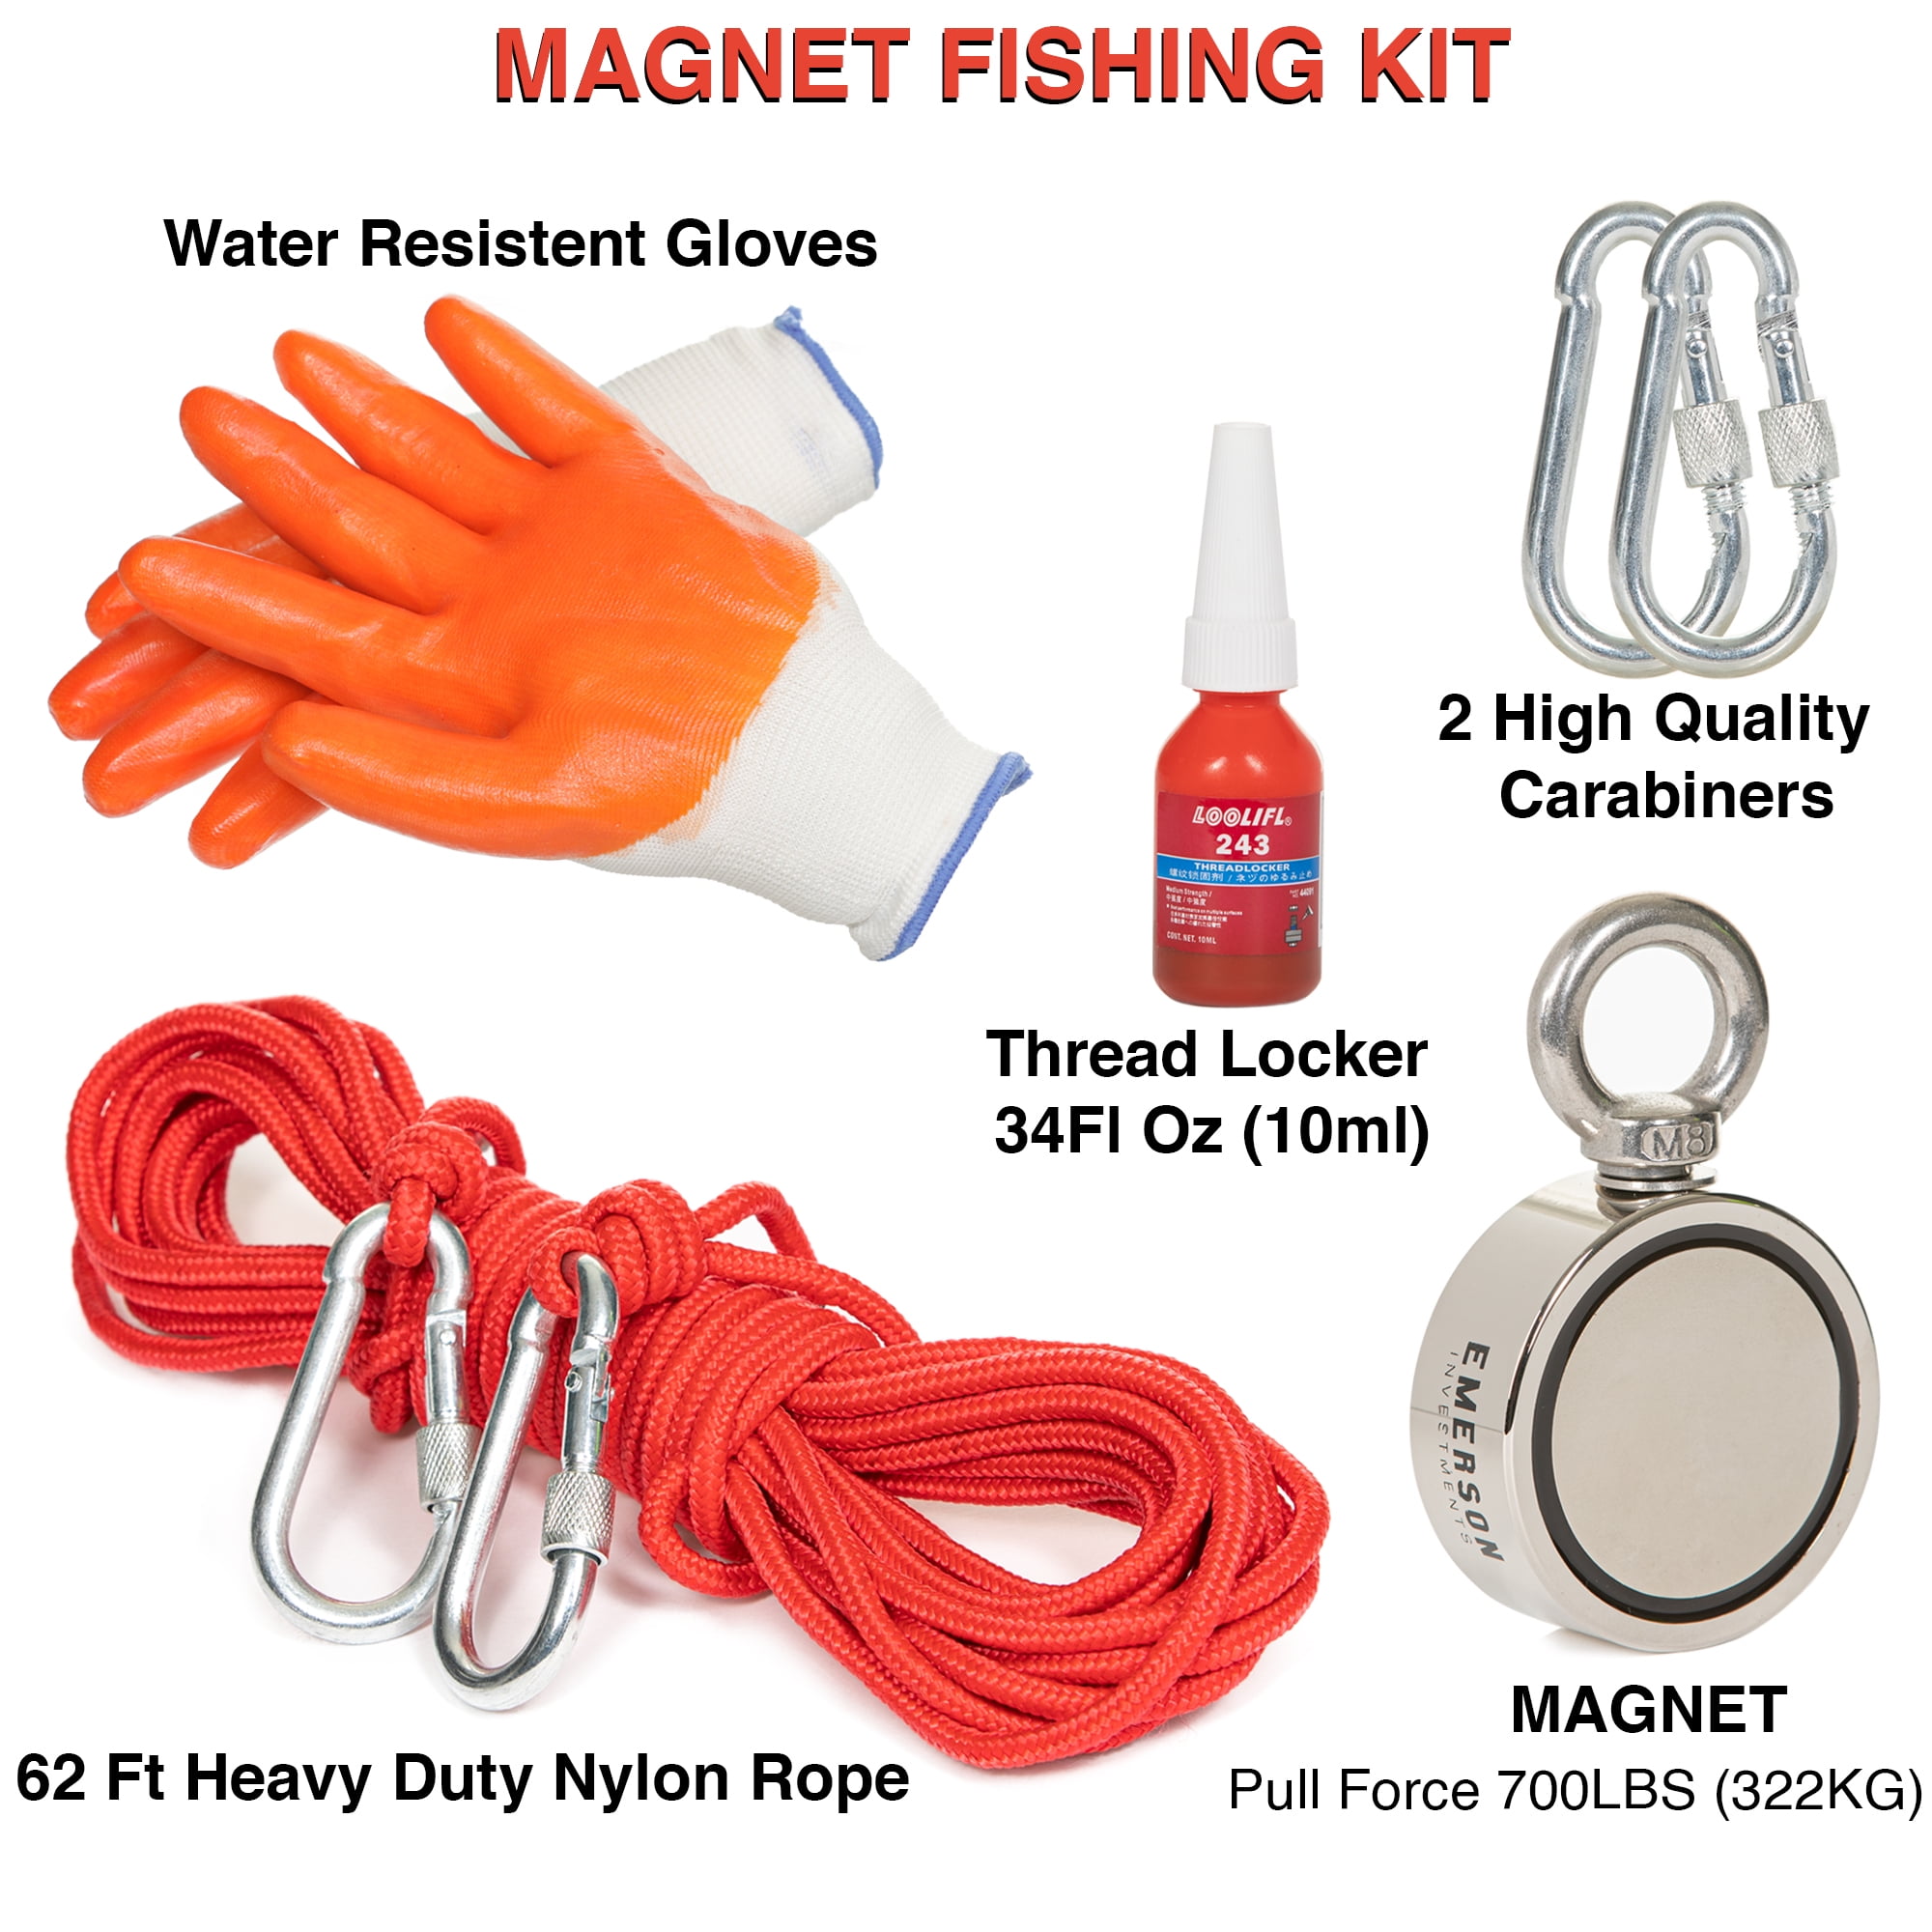 Magnet Fishing Nylon Rope 65 Feet All Purpose High Strength Cord Safety Braid R 